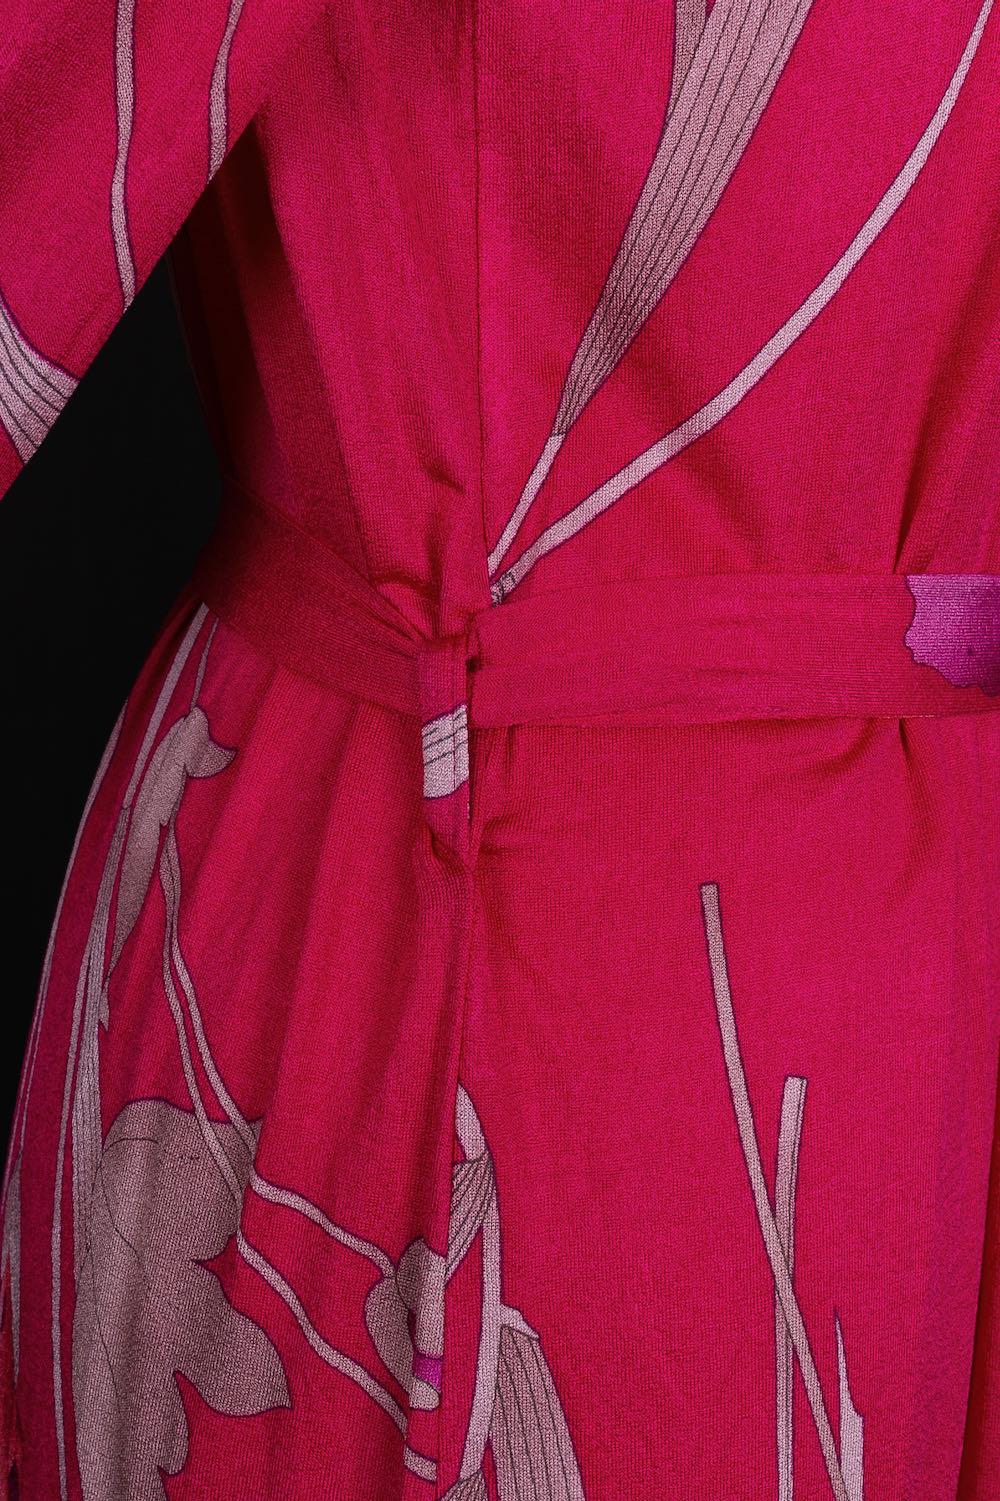 Leonard Floral Print Dress on Fuchsia Pink Background For Sale 2